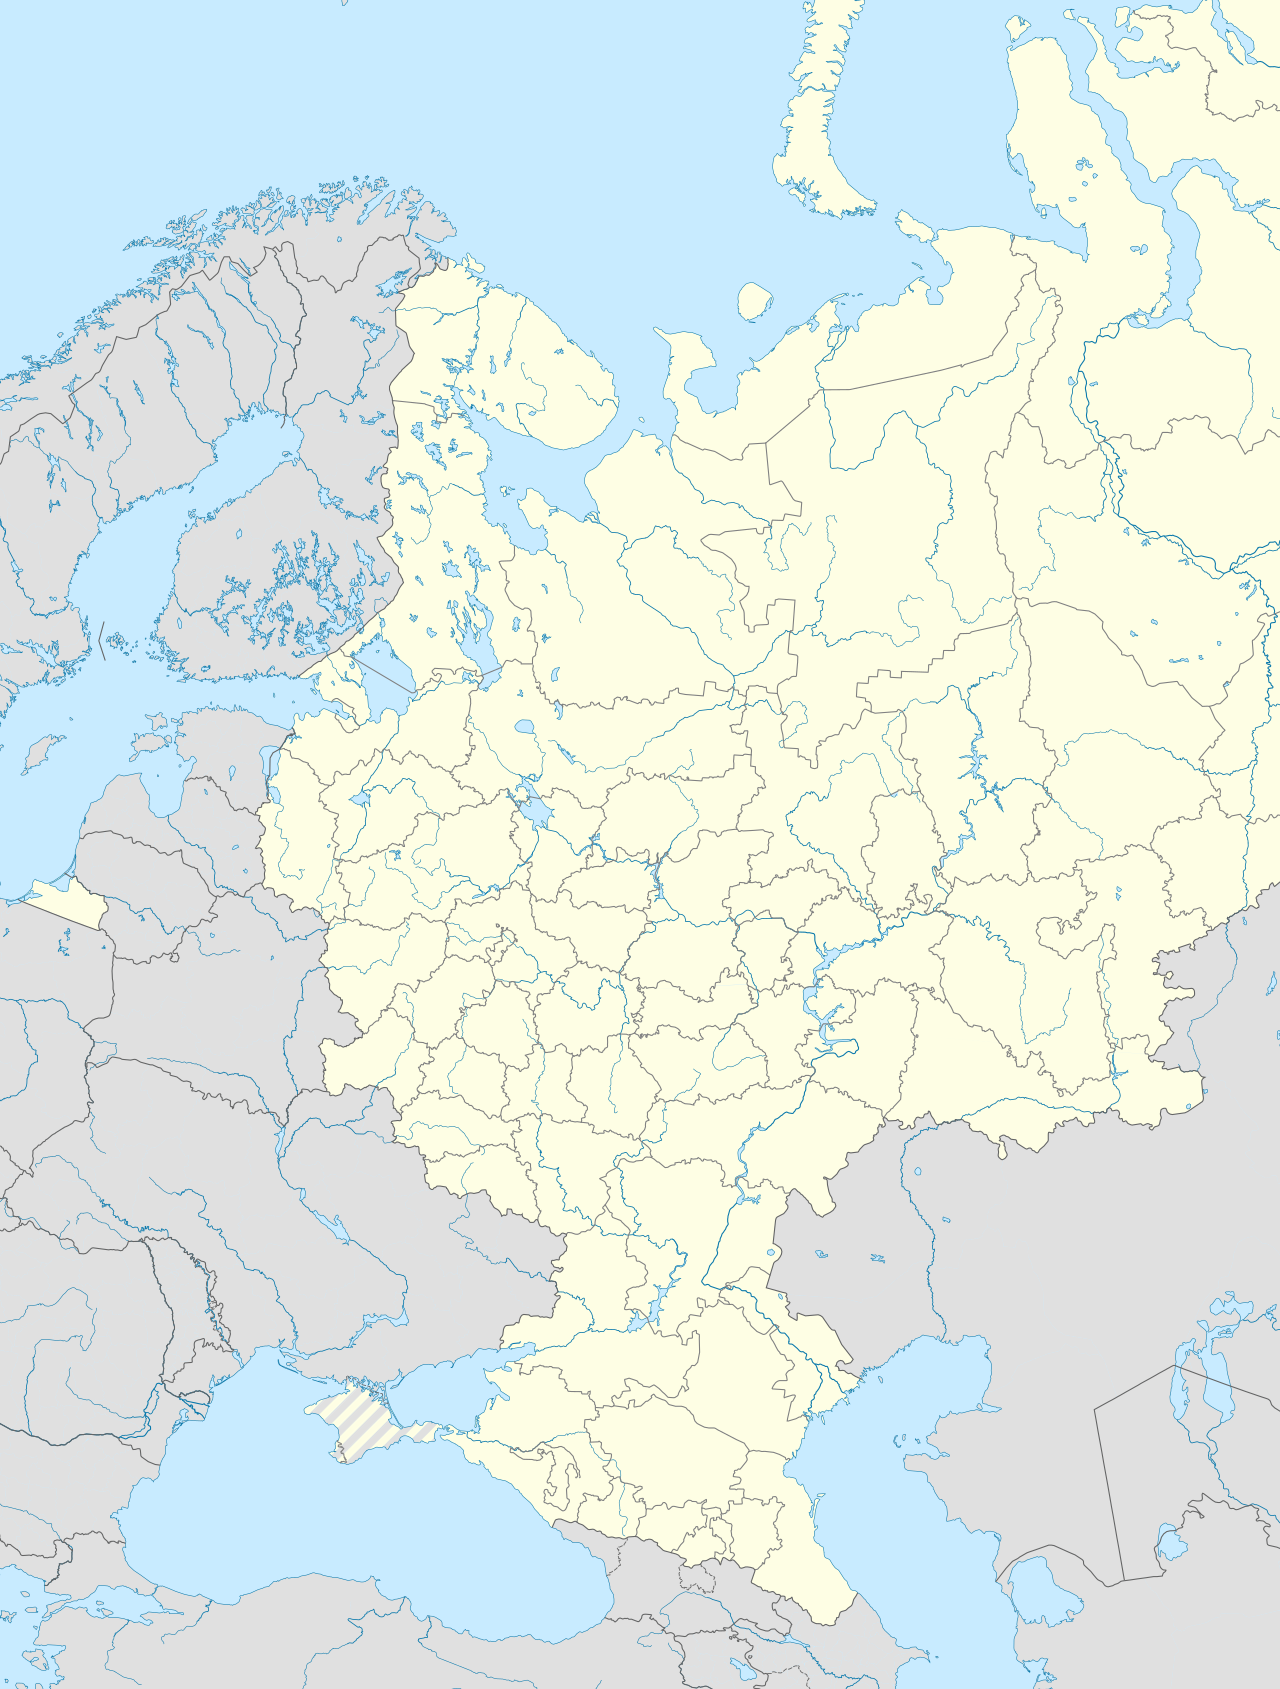 Noclador/sandbox/2022 Bde comparison is located in European Russia